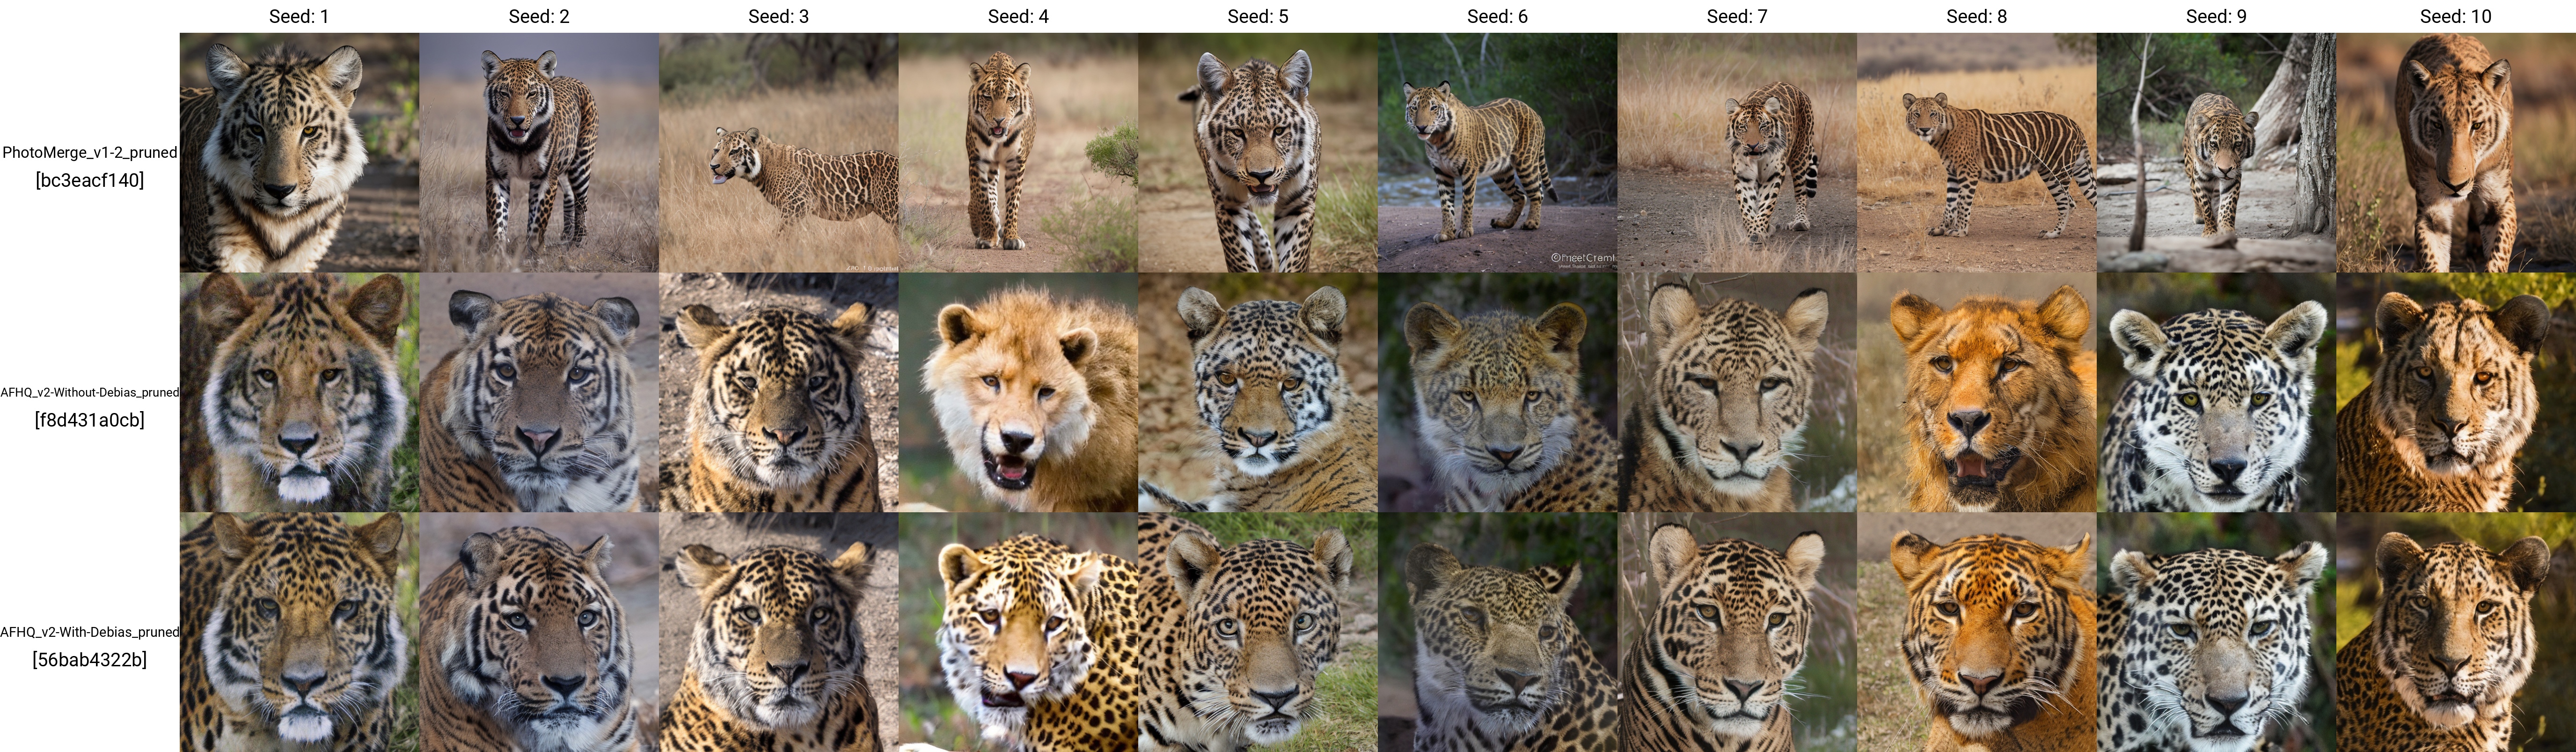 Animal Faces-HQ v2 (AFHQ) - Debias Estimation Loss Comparison Test image by xzuyn